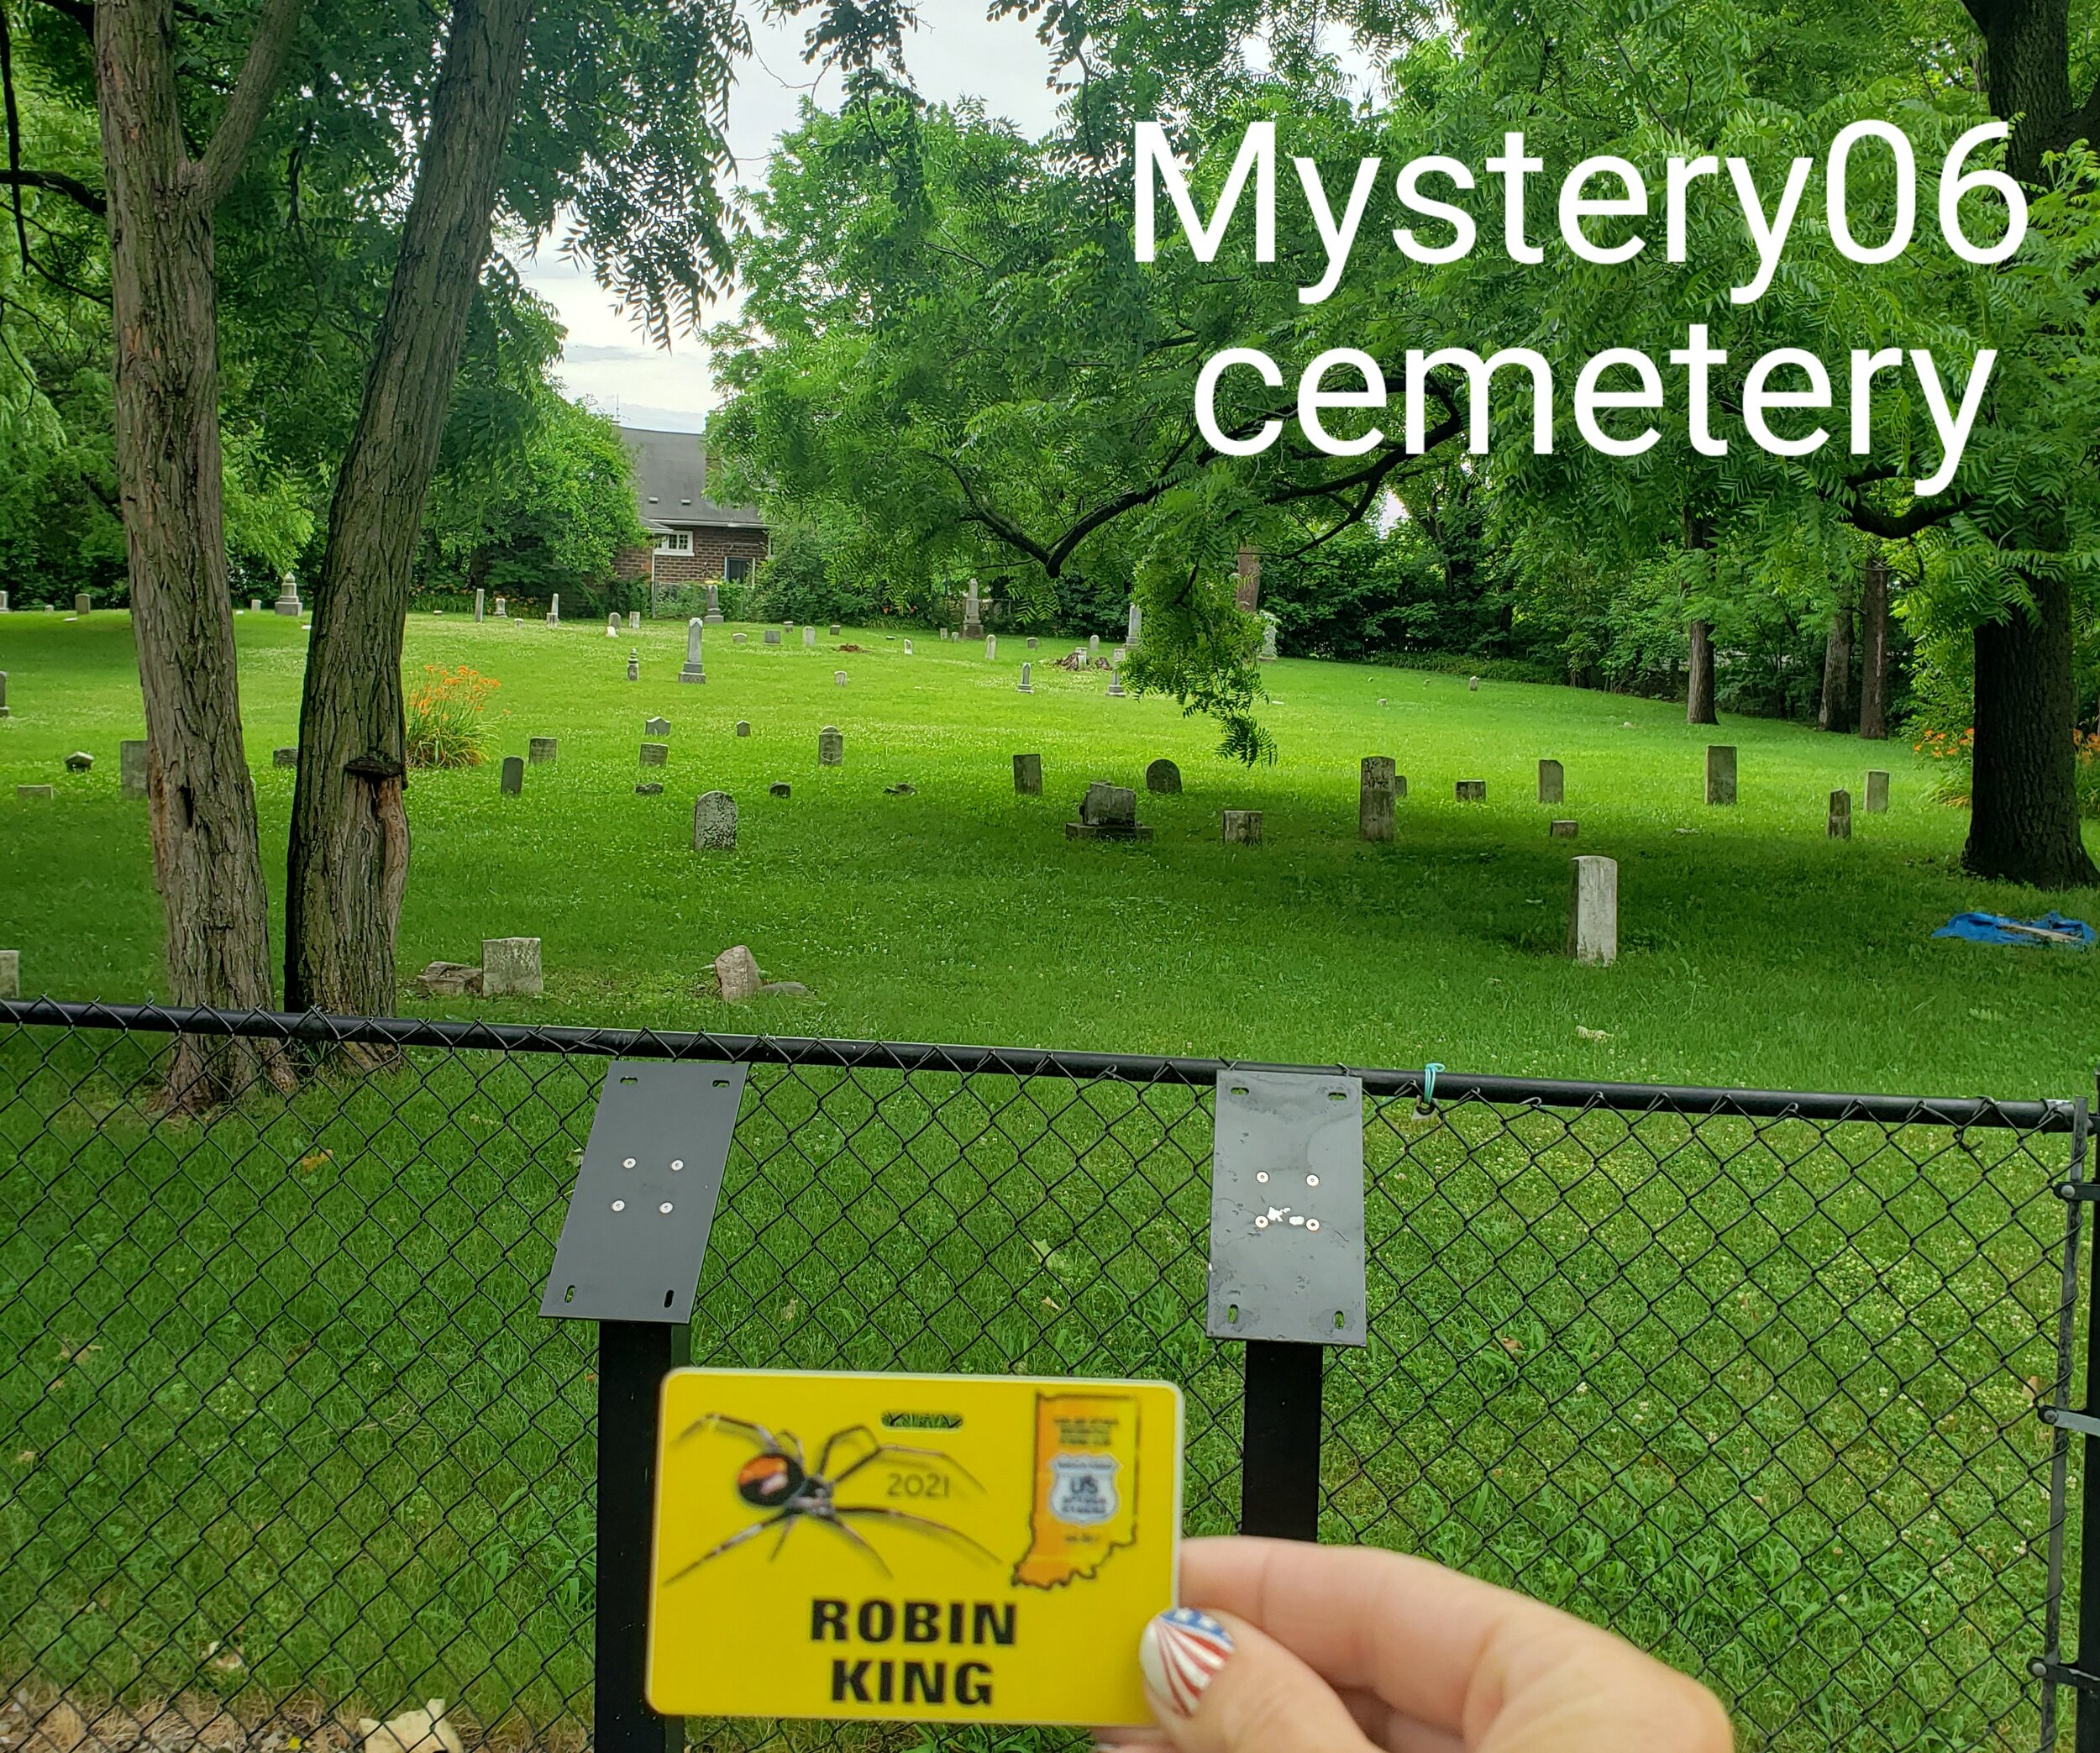 Mystery06 cemetery.jpg